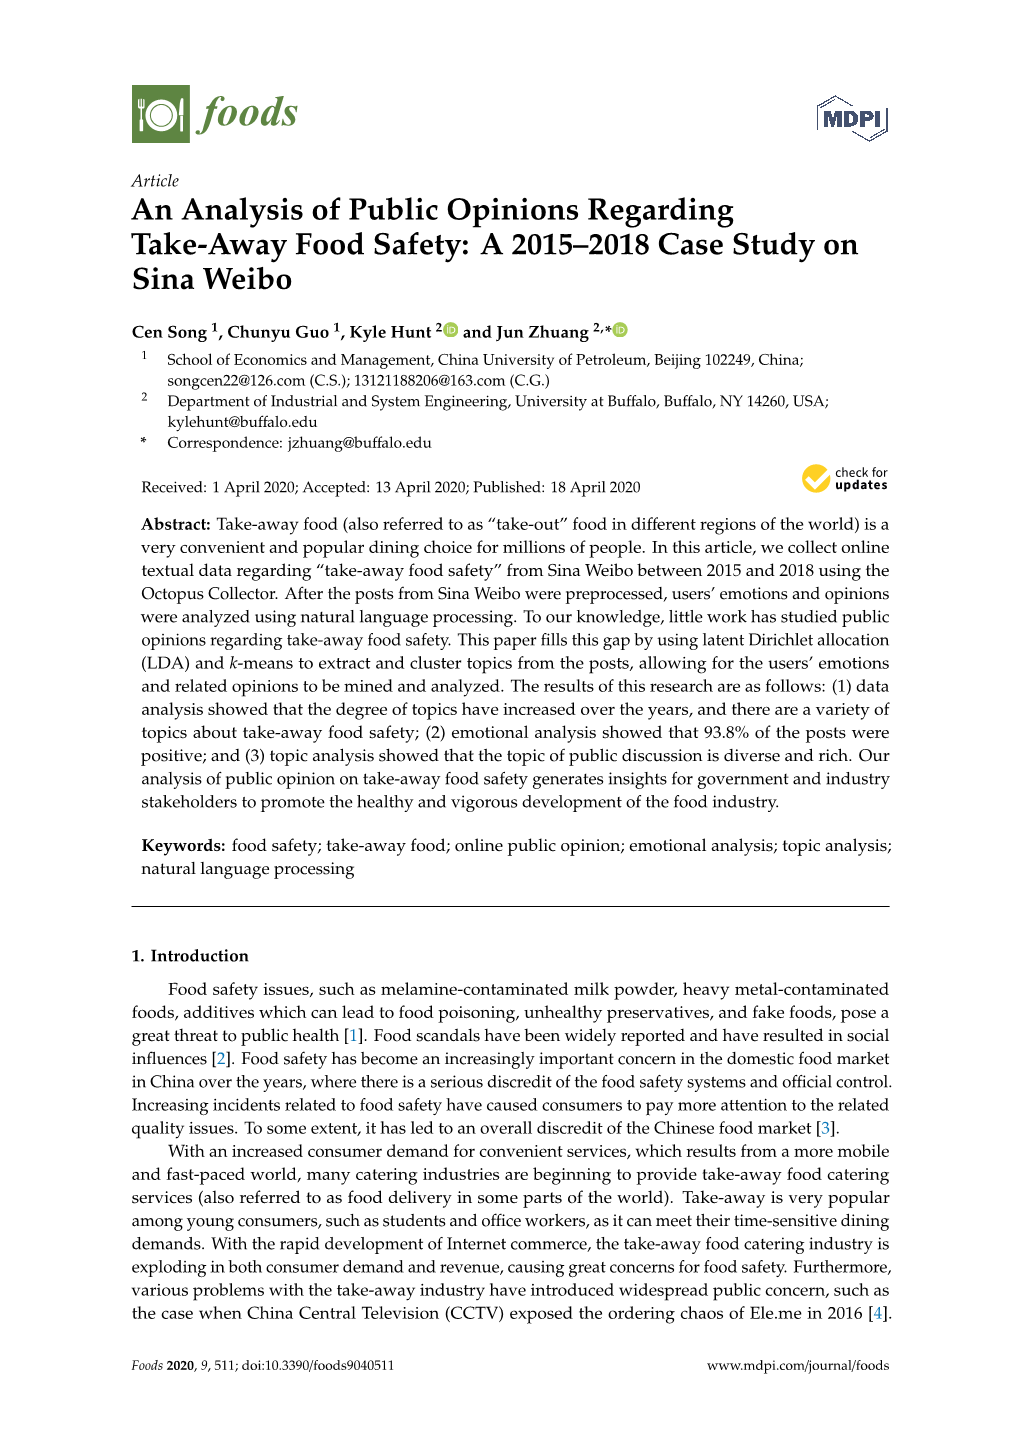 An Analysis of Public Opinions Regarding Take-Away Food Safety: a 2015–2018 Case Study on Sina Weibo